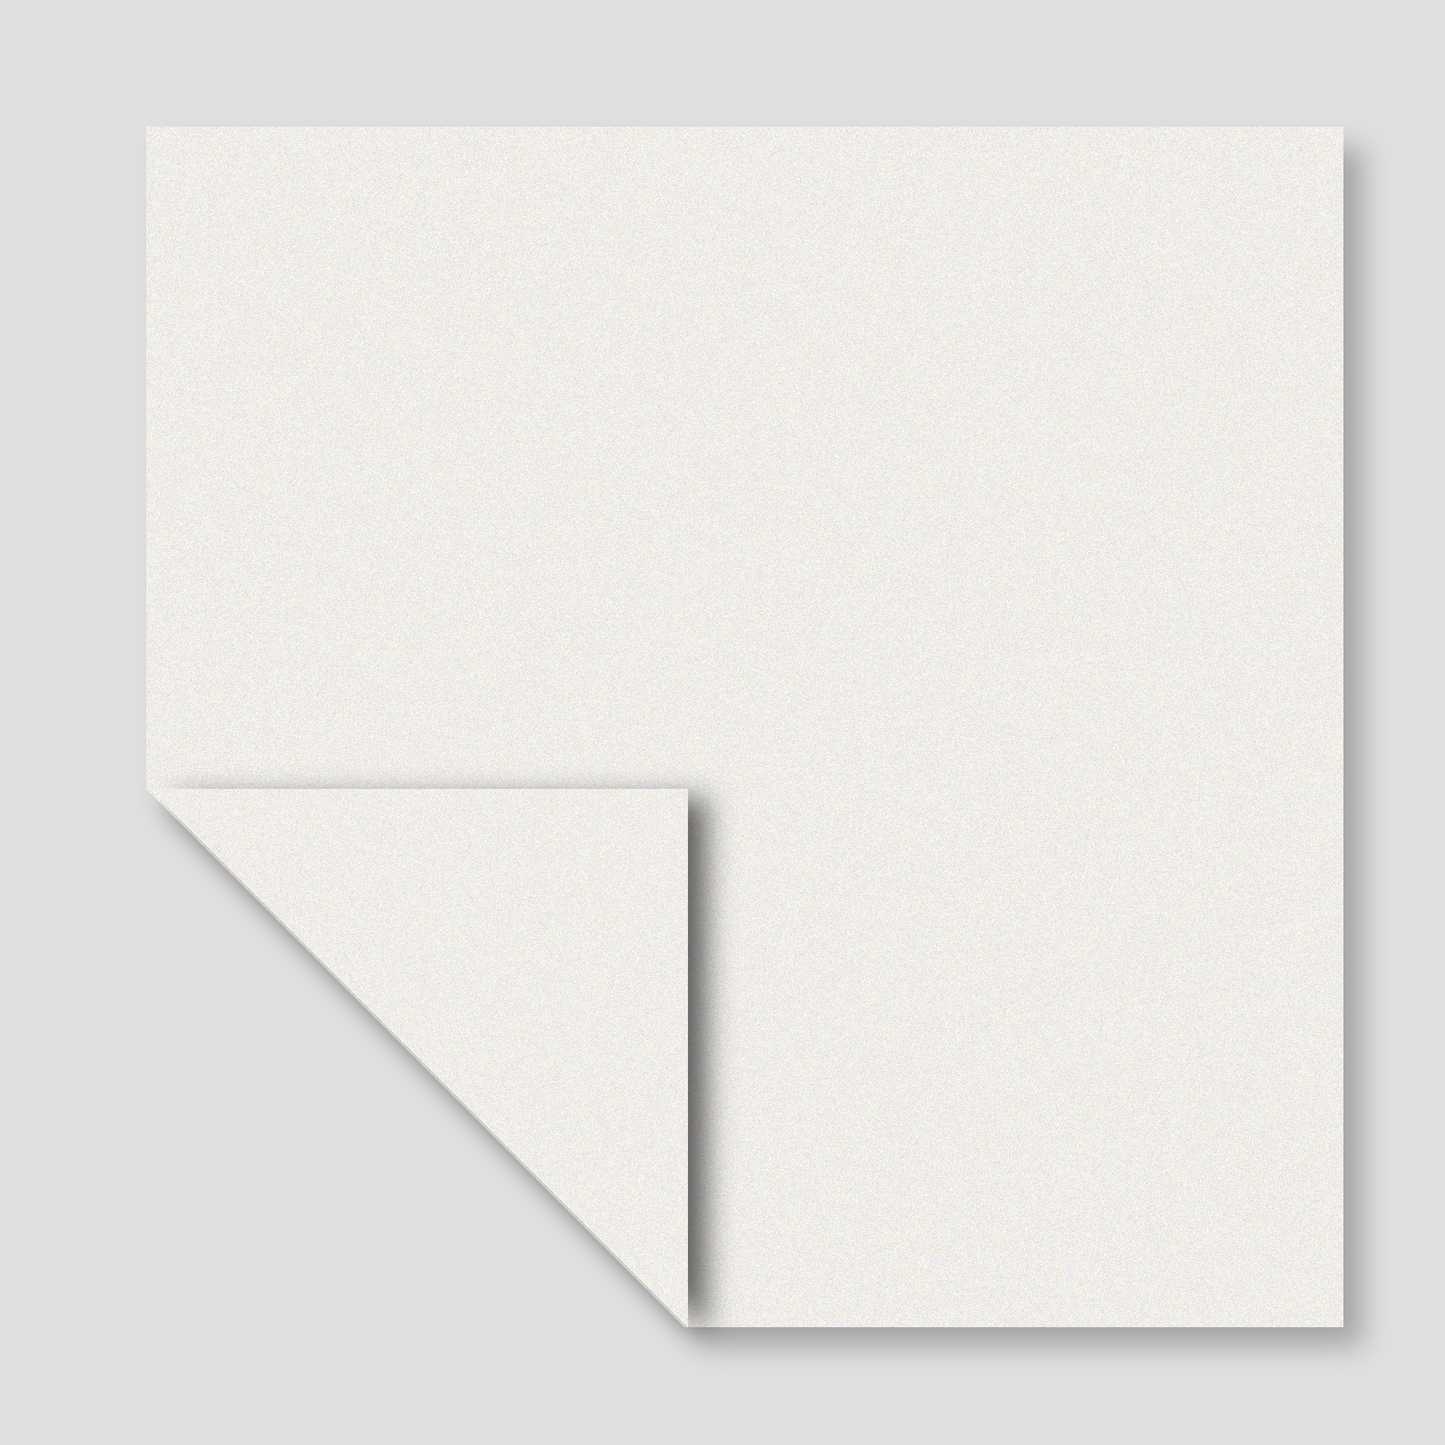 【Taro's Origami Studio】ビオトープ ジャンボ 13.75インチ/35cm 単色(コットンホワイト) 10枚入(全同色) 上級フォルダー用高級和紙(日本製)